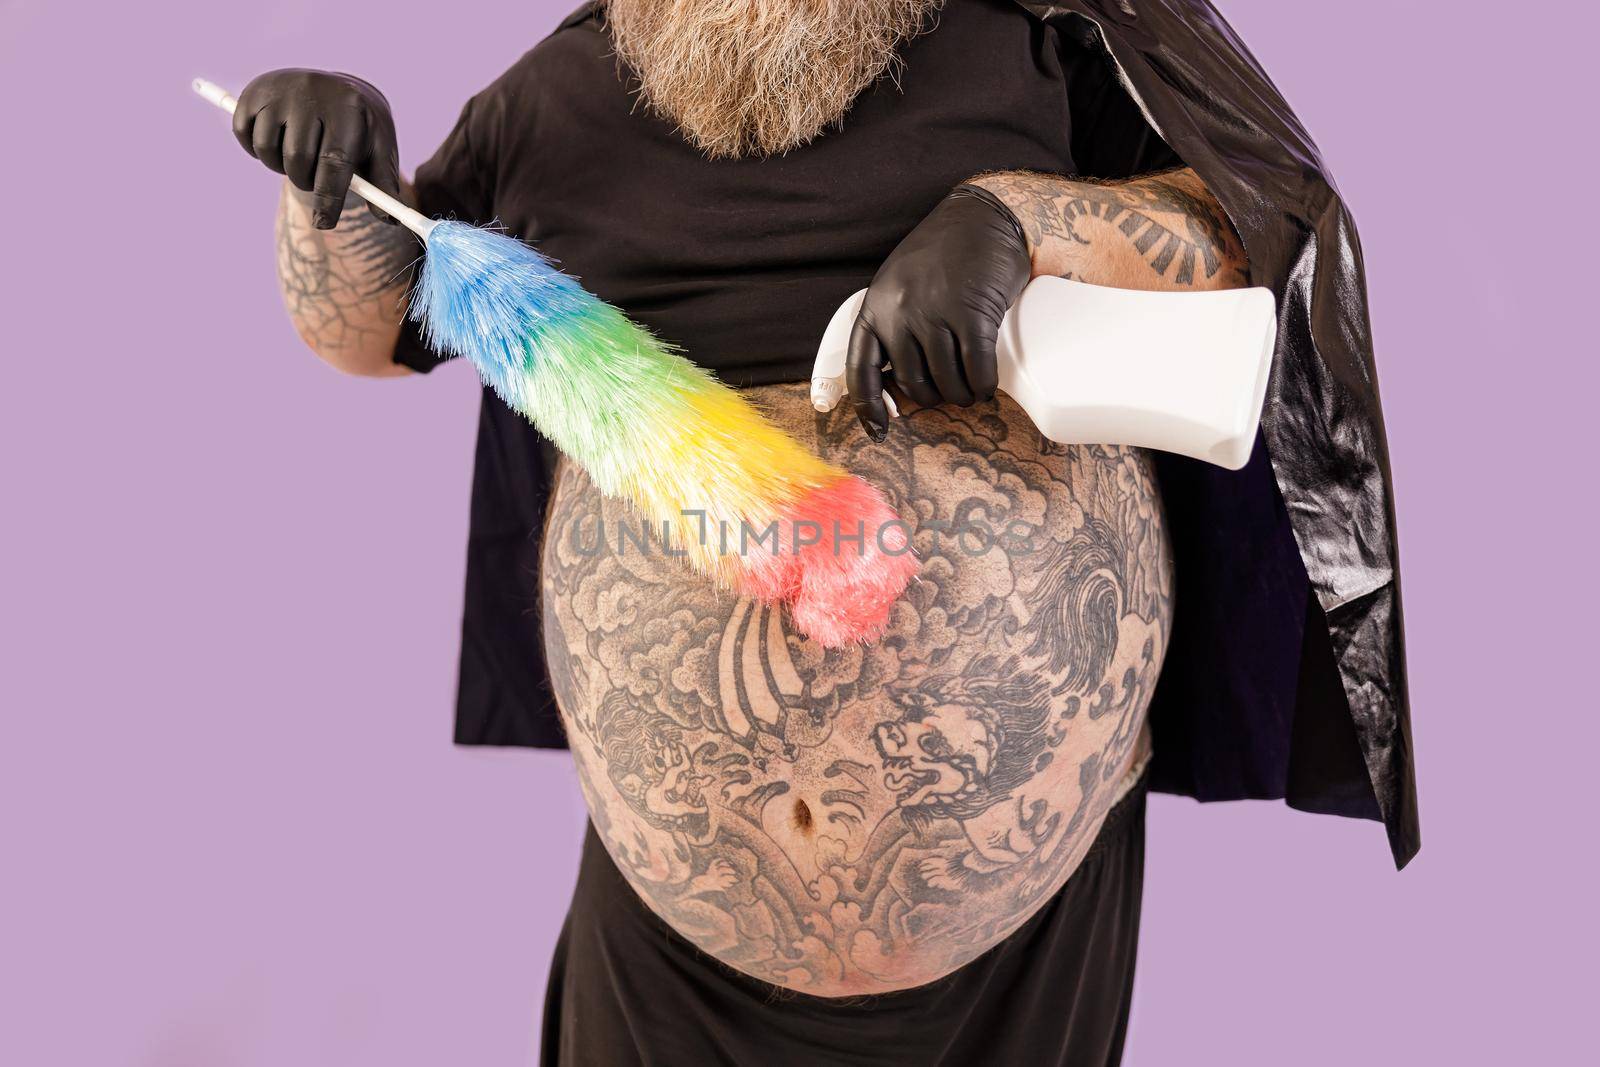 Fat man in hero suit sprays detergent onto brush on purple background by Yaroslav_astakhov